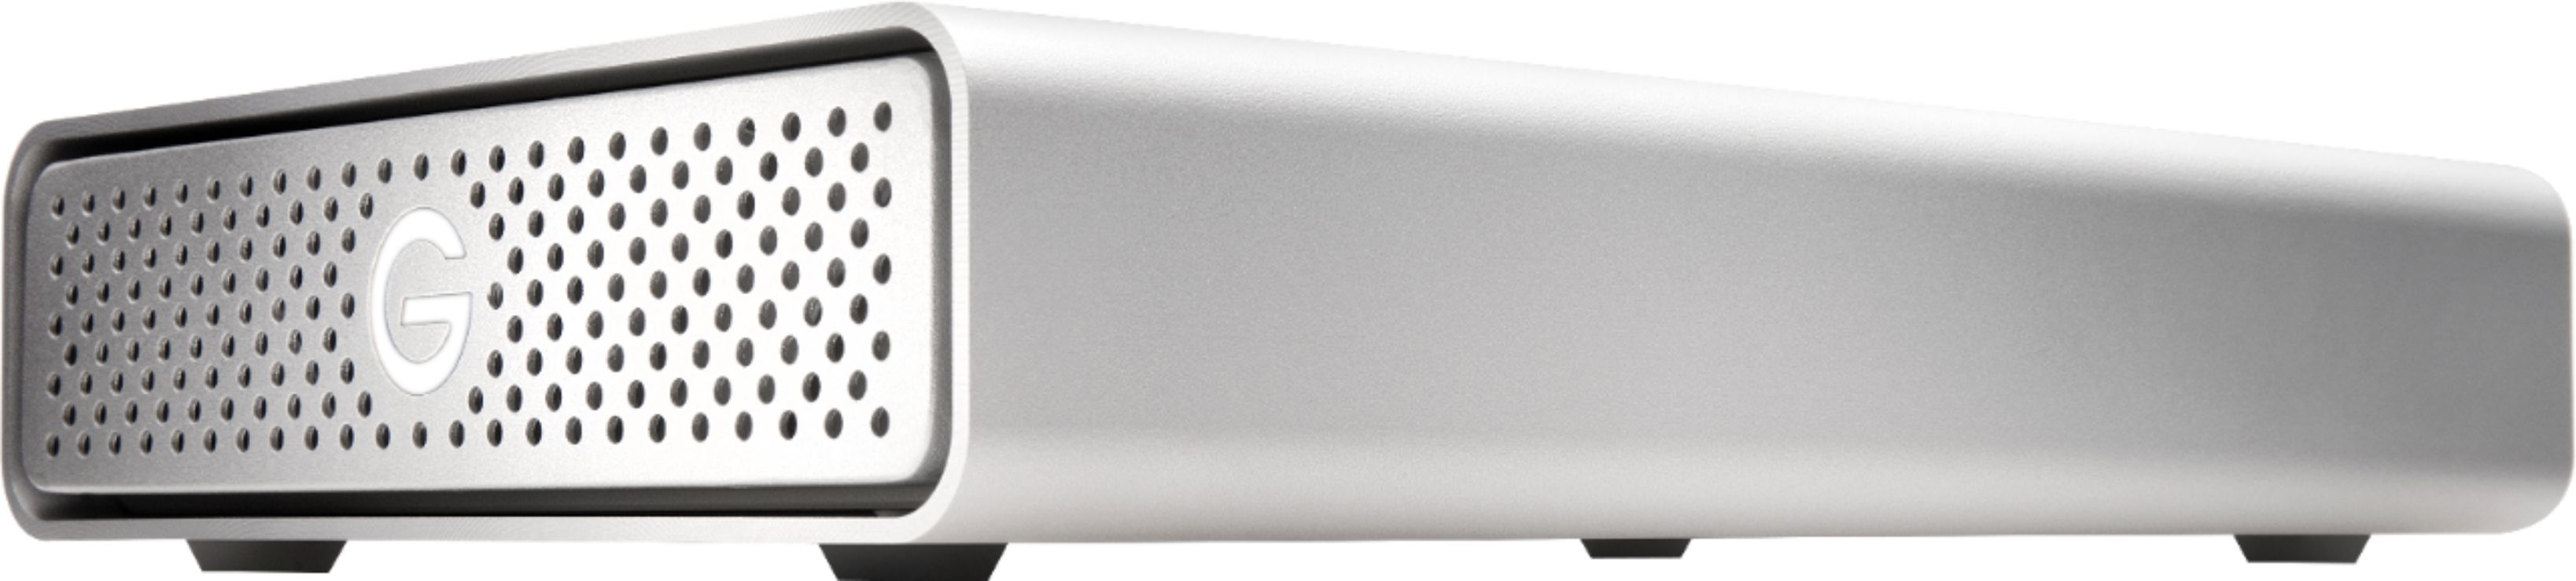 0G03594 G-Technology 4TB G-DRIVE USB 3.0 Desktop External Hard Drive Compact High-Performance Storage Silver 